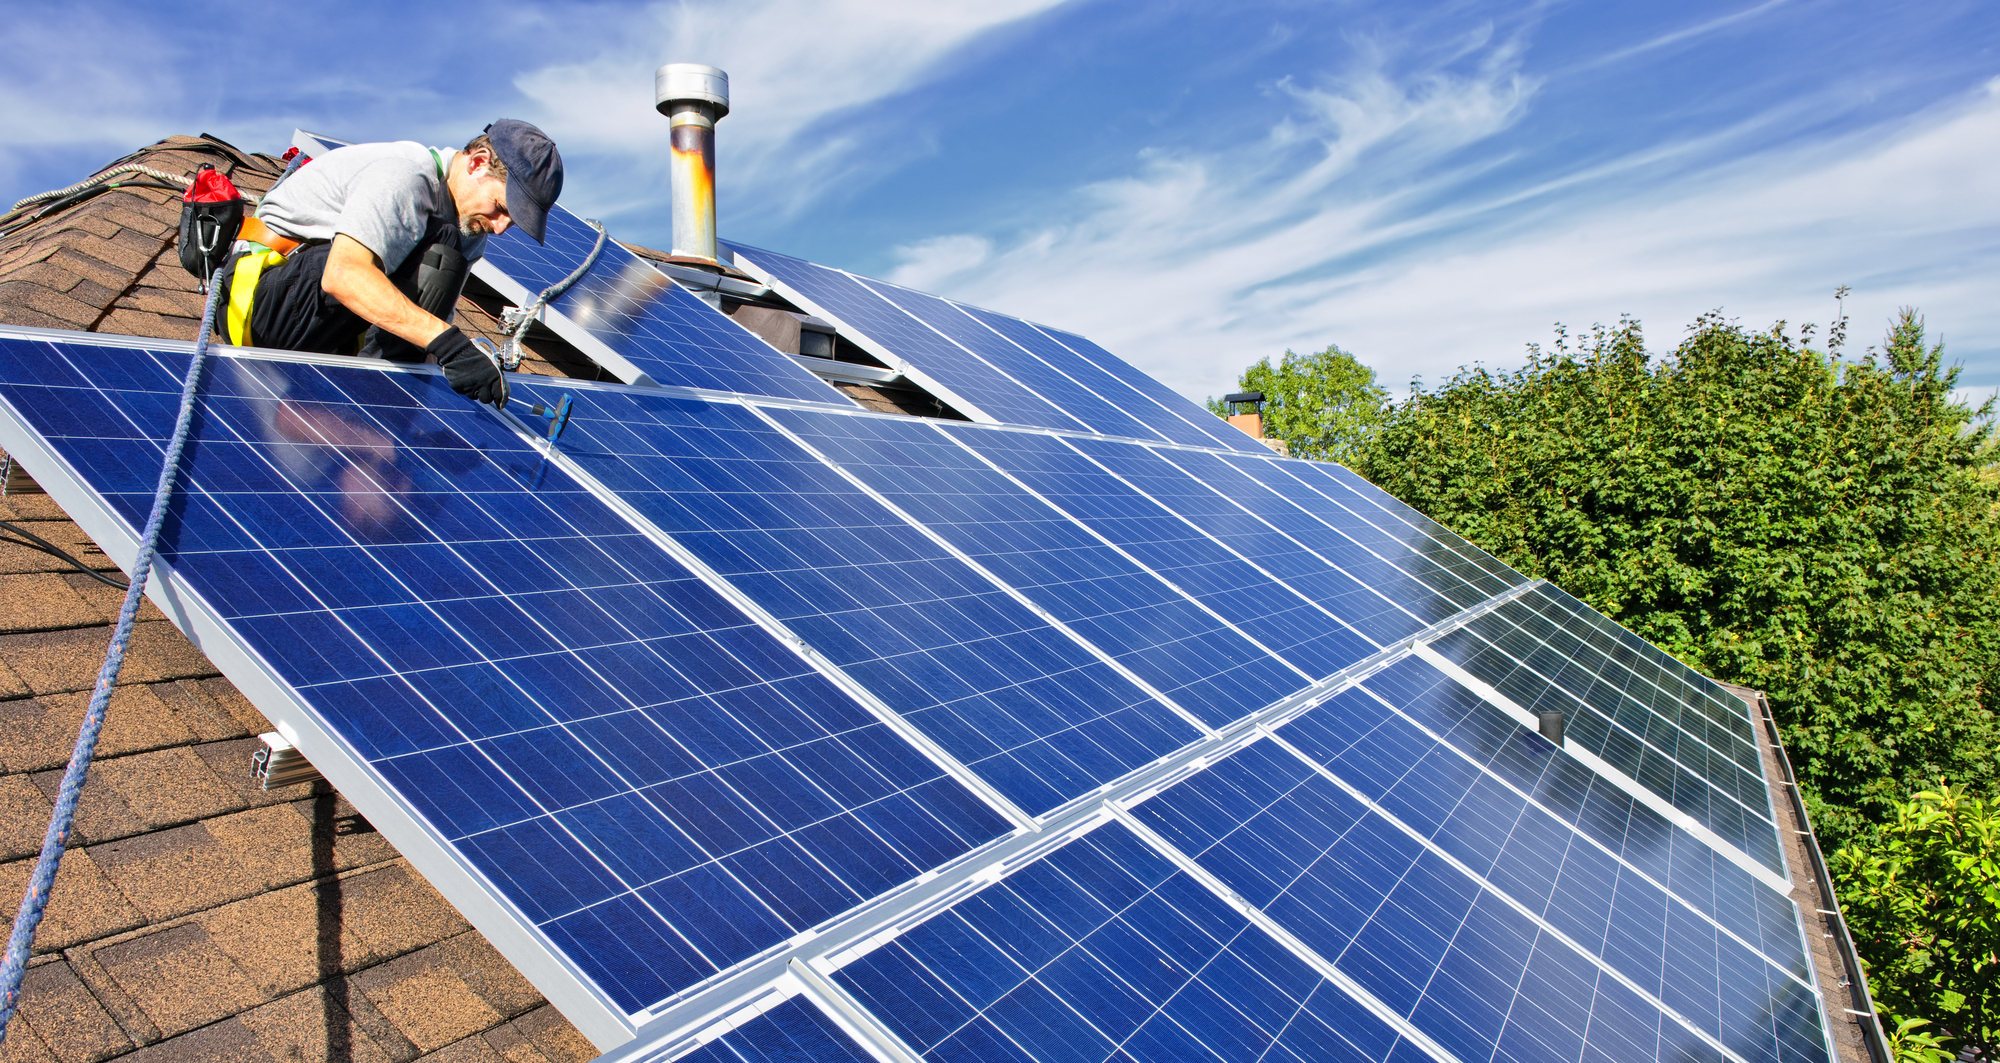 Man installing alternative energy photovoltaic solar panels on roof